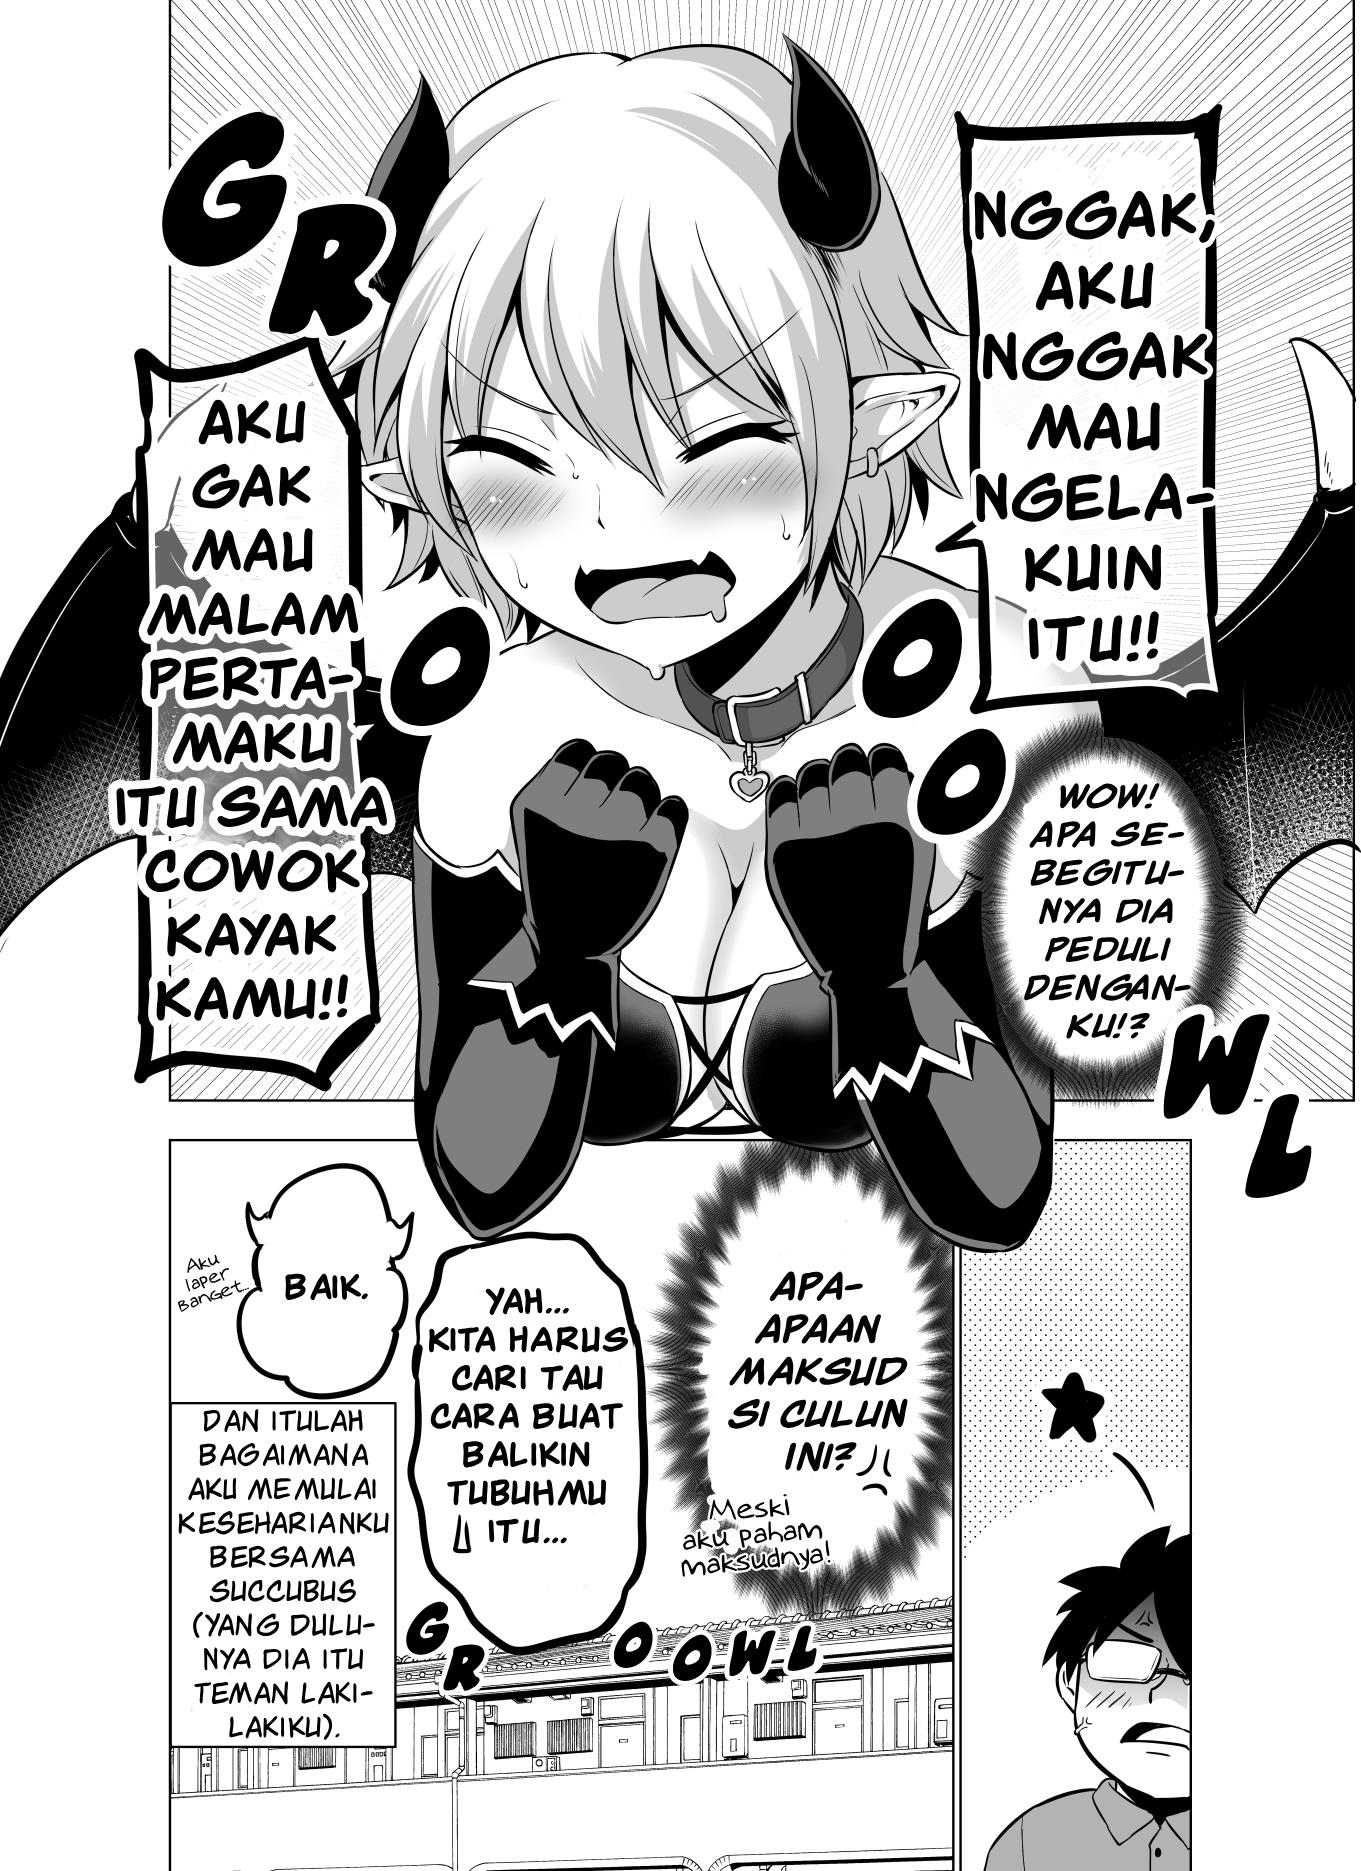 manga where man turns into succubus